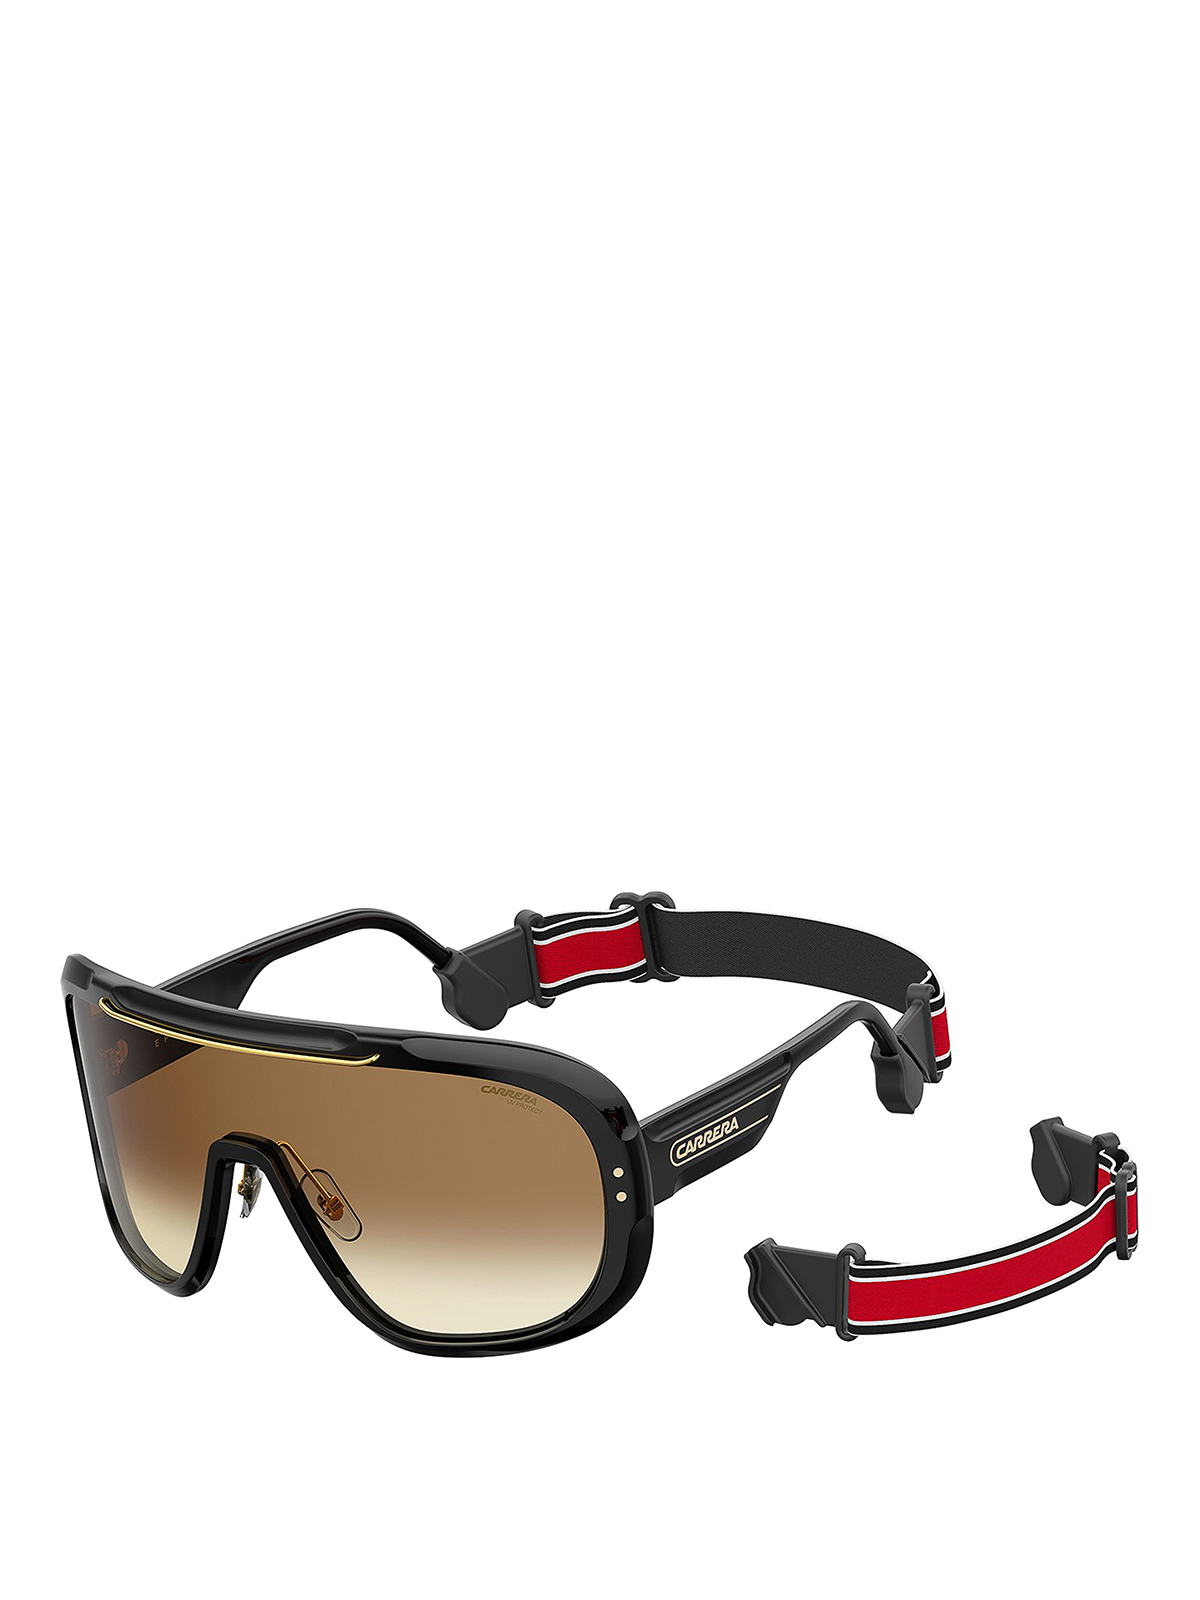 Sunglasses Carrera - Epica sunglasses - CARRERAEPICA80786 